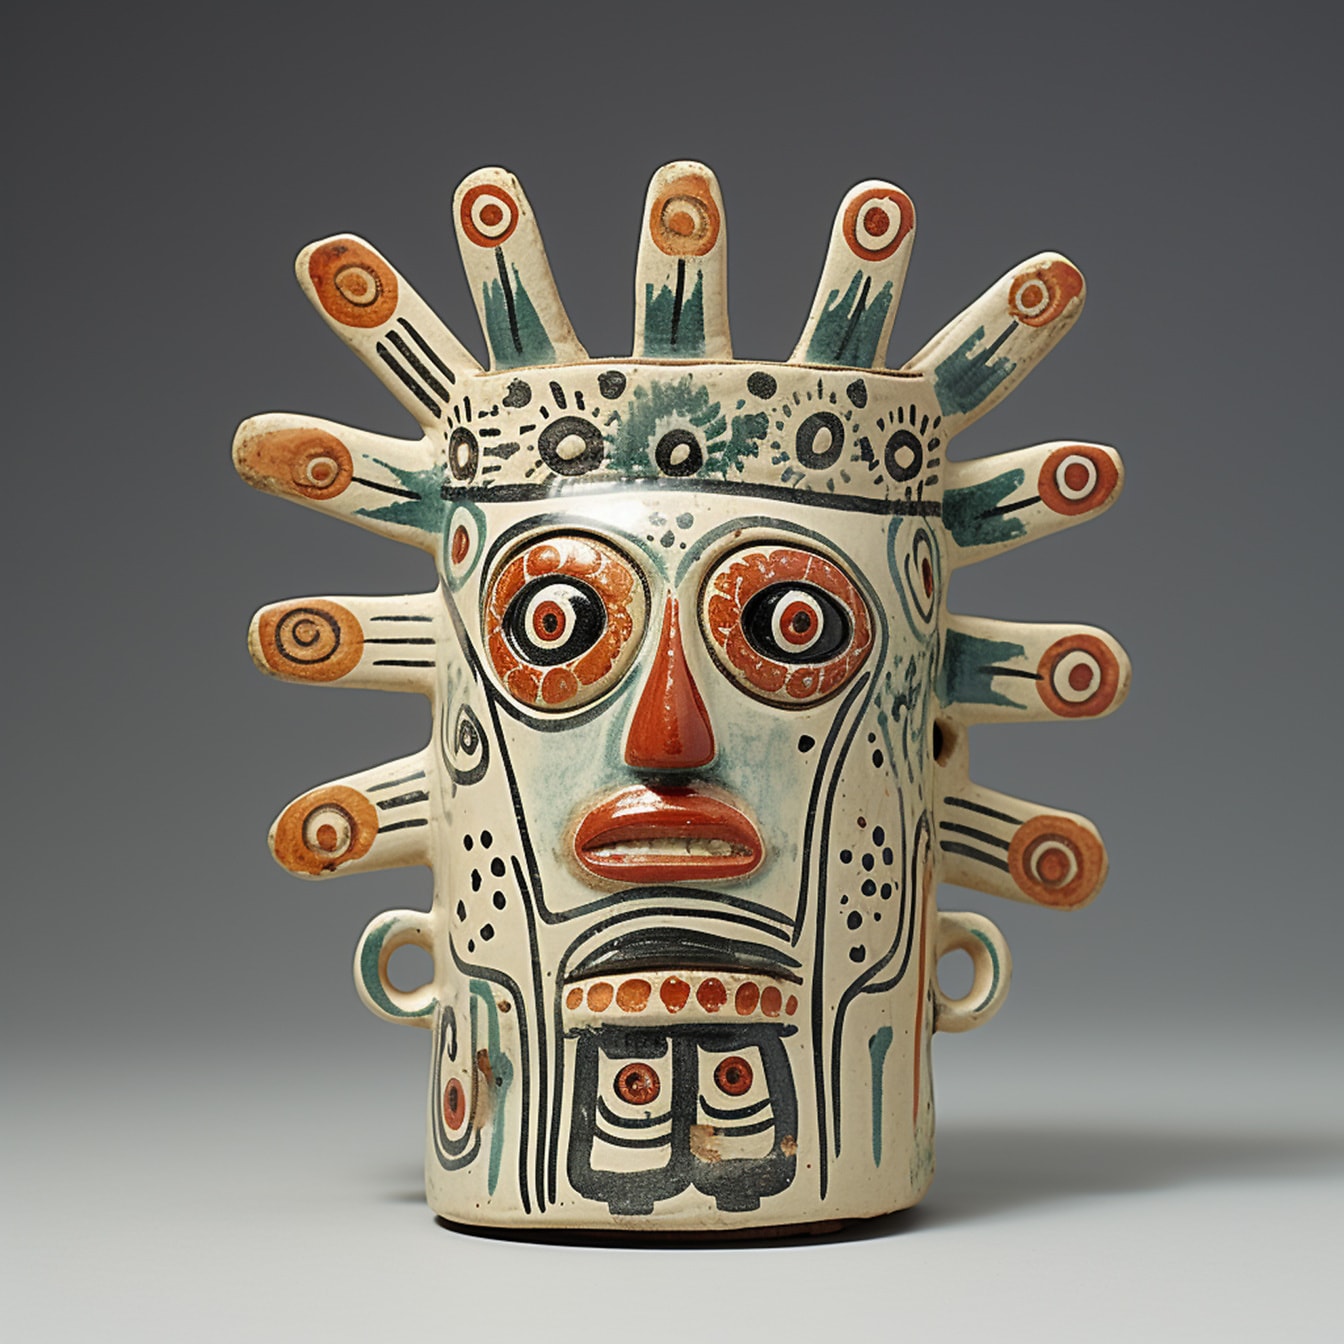 hecho a mano, tradicional, Patrimonio, mexicana, porcelana, figurilla, decoración